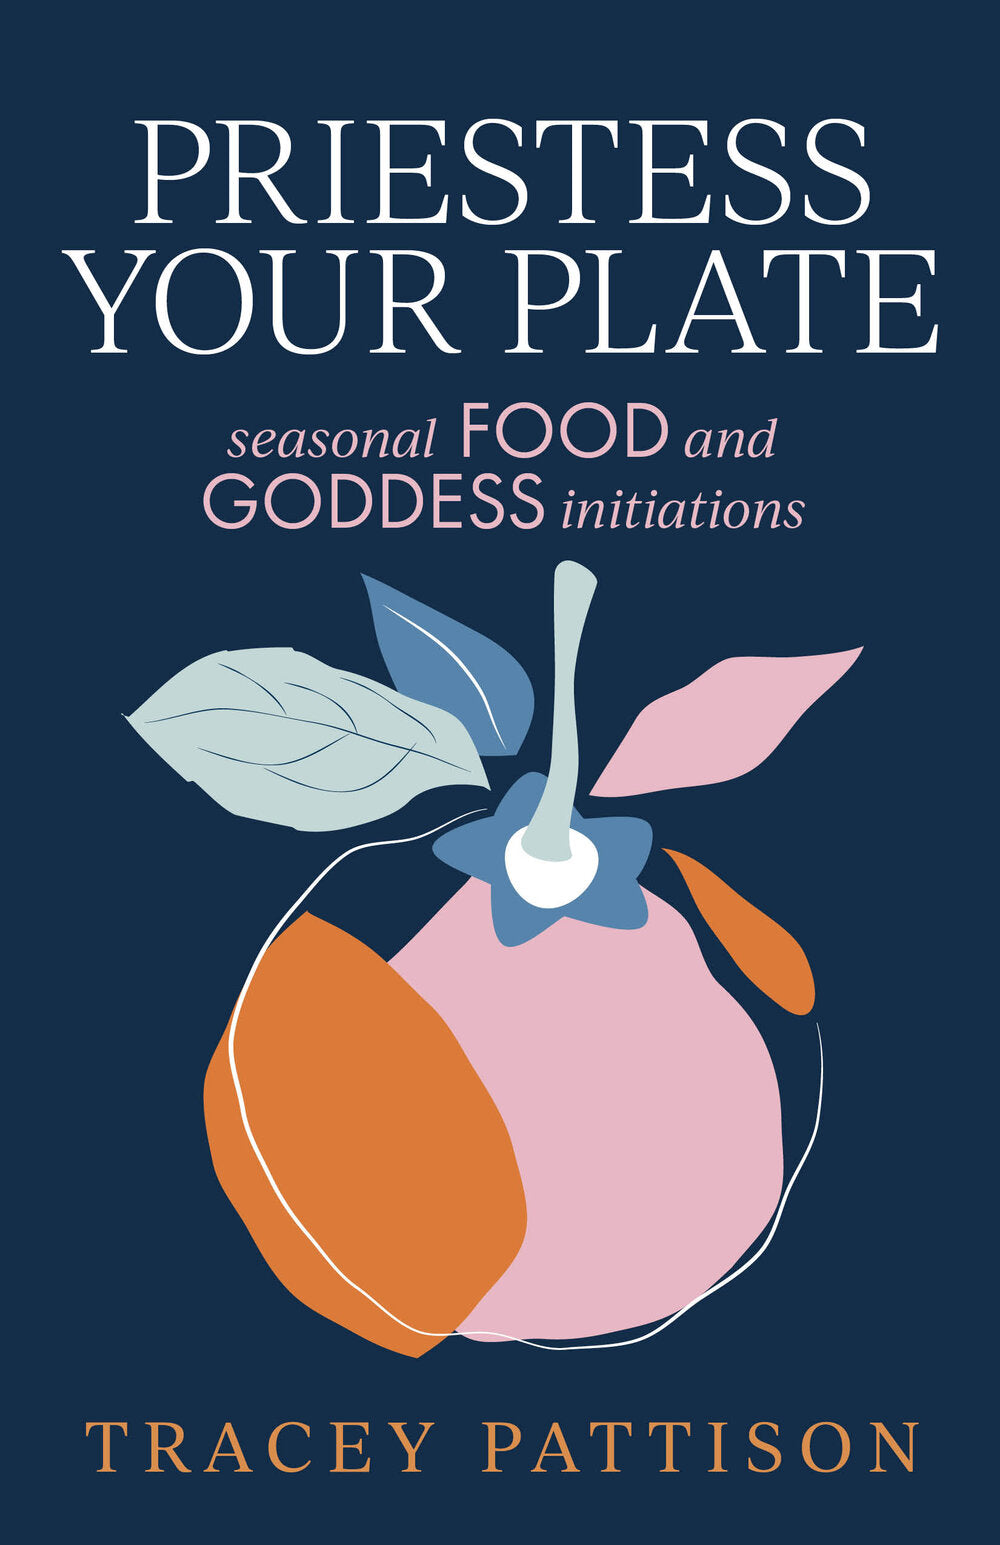 Priestess Your Plate